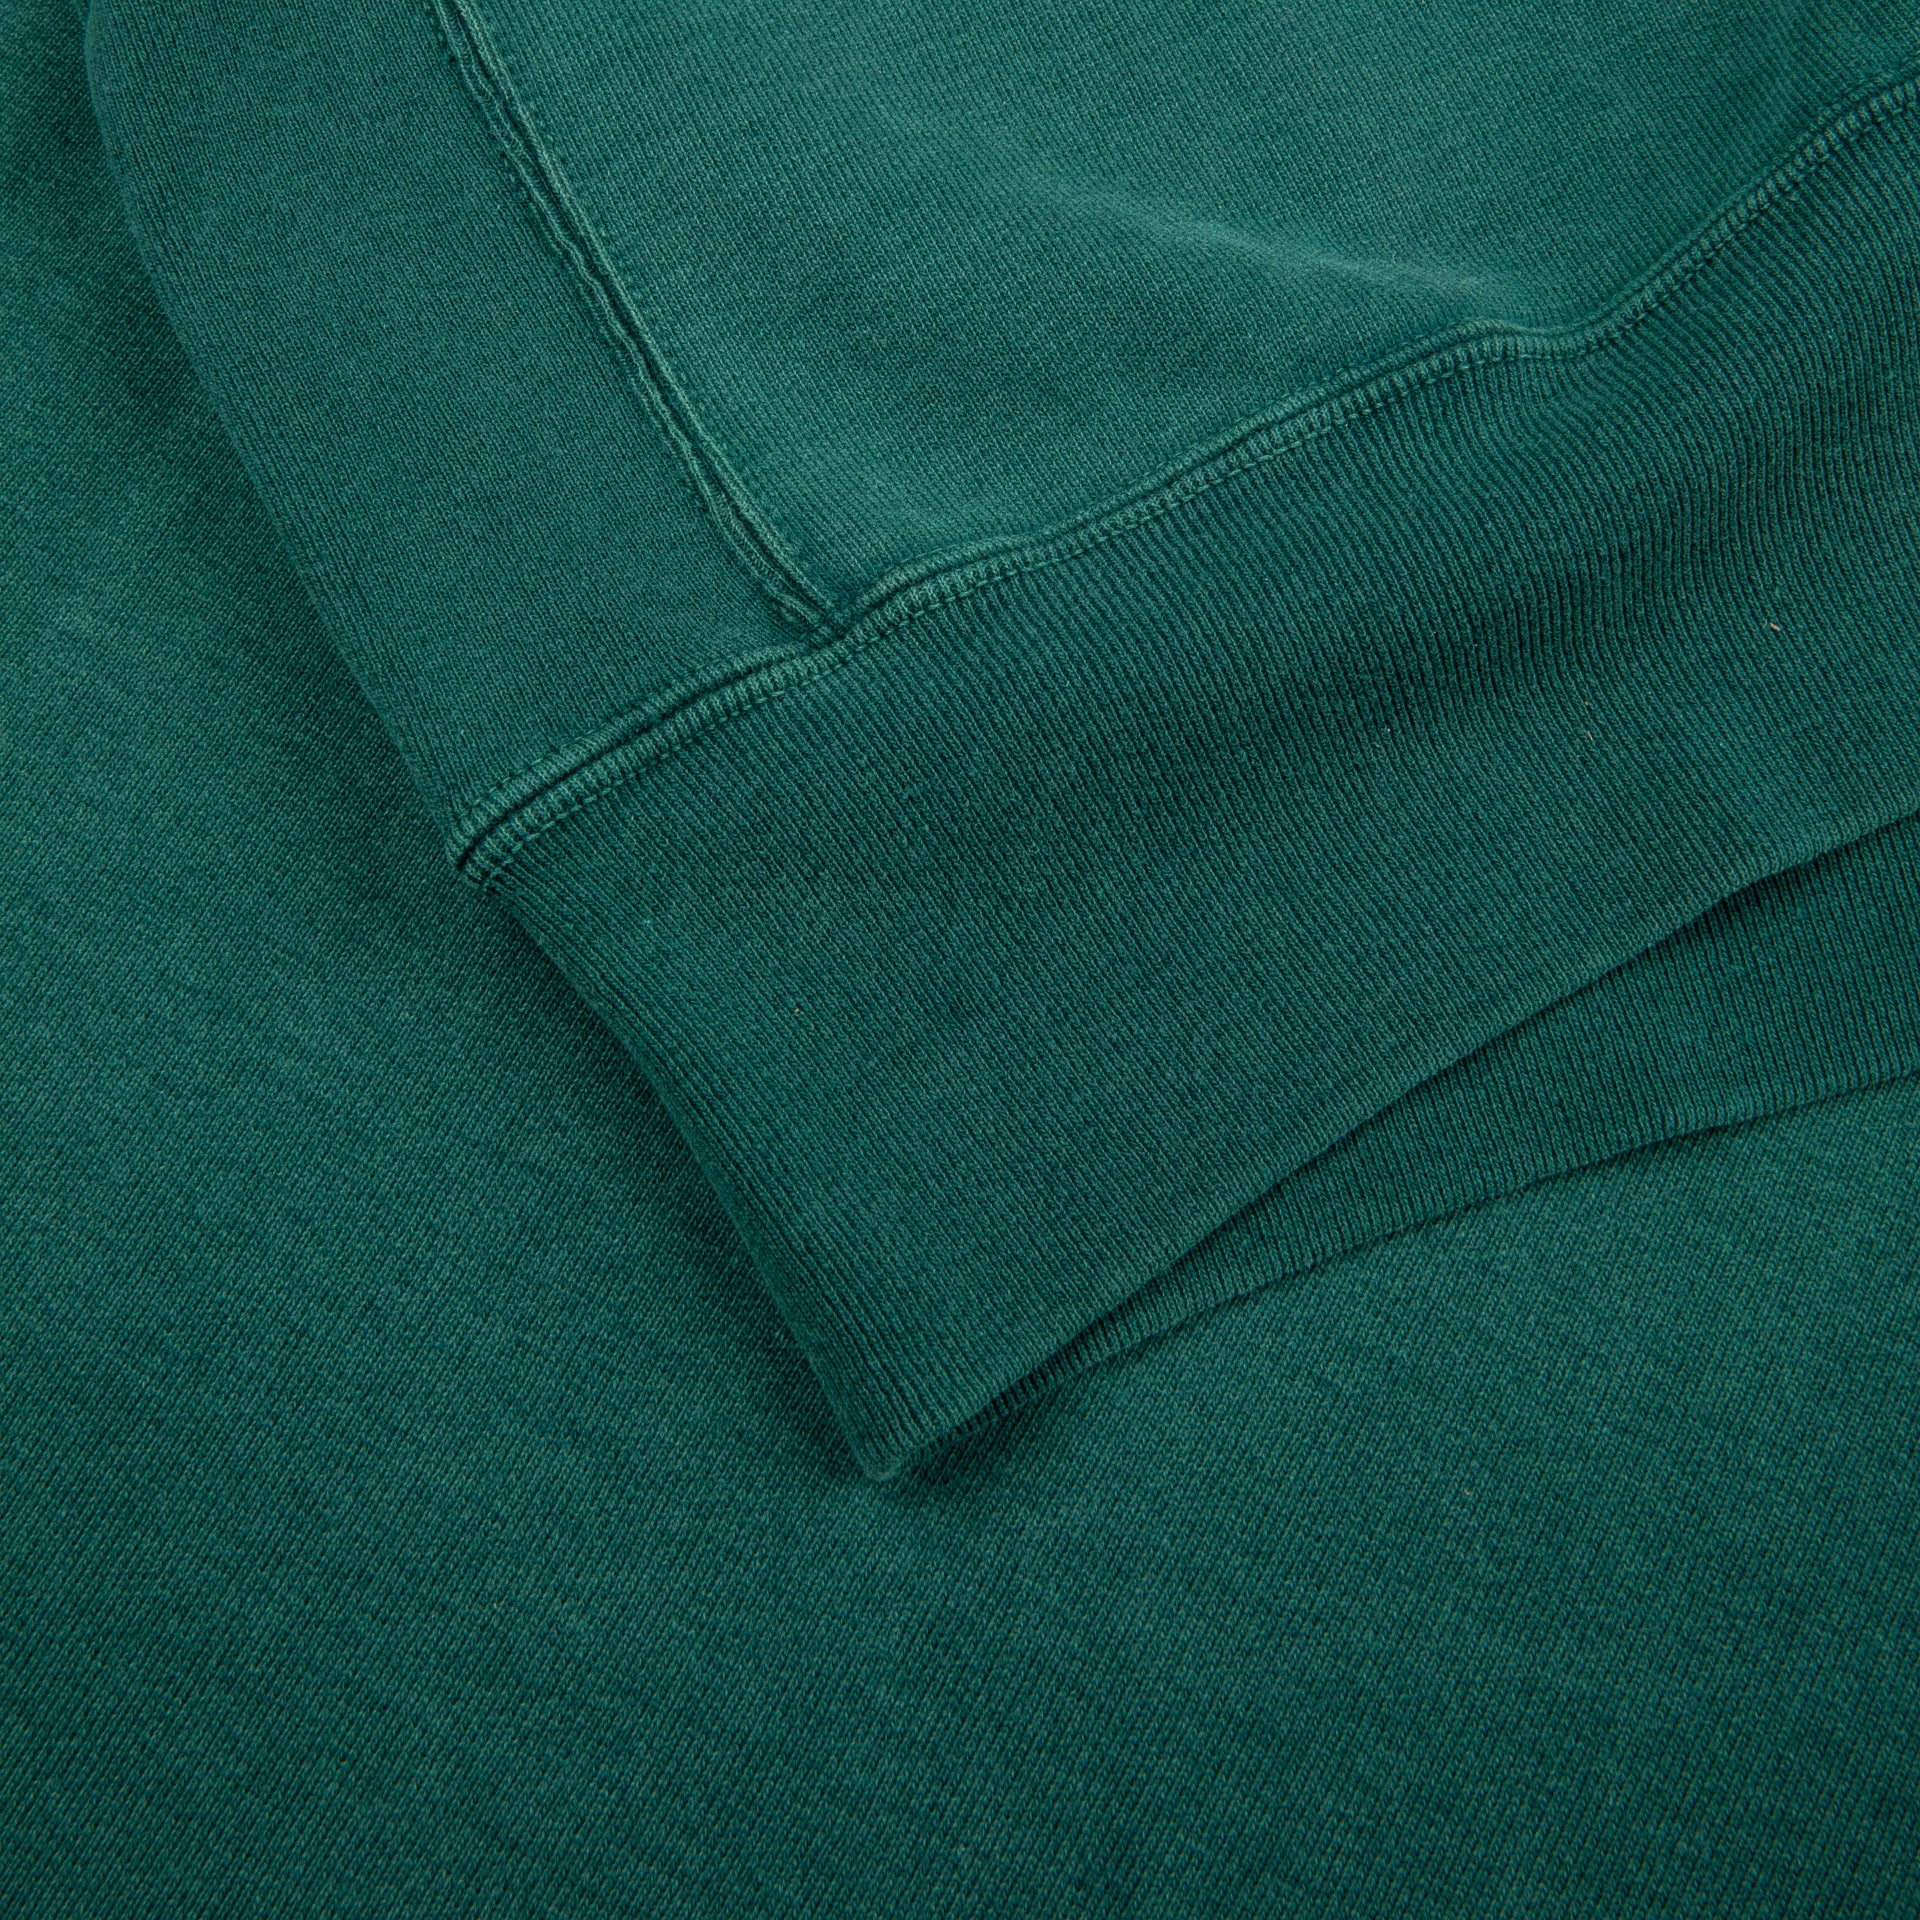 Remi Relief Special Finish Fleece Crew neck sweater Exclusive! Green